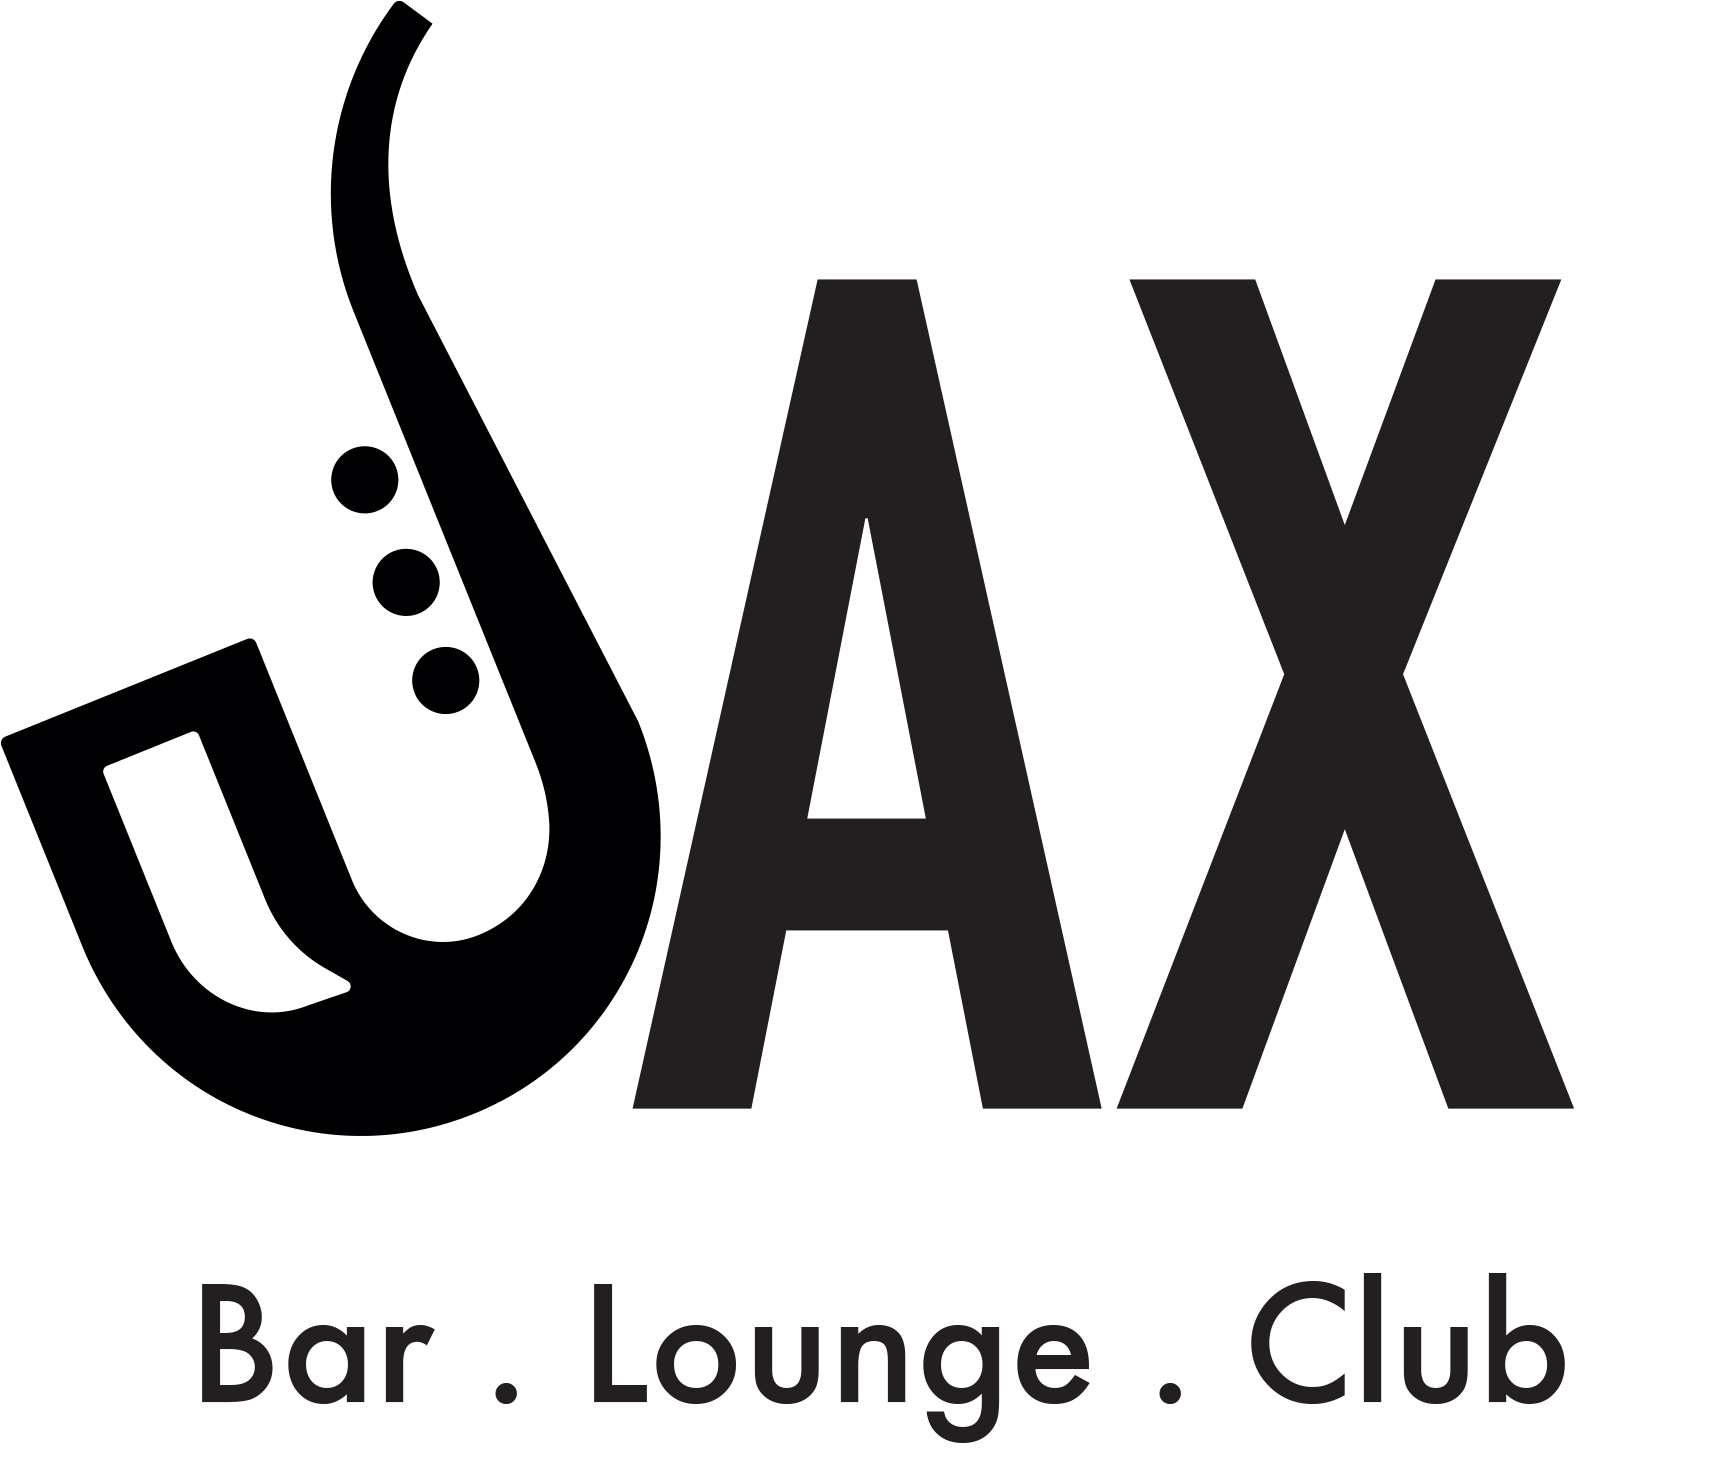 SAX club and lounge in abu dhabi